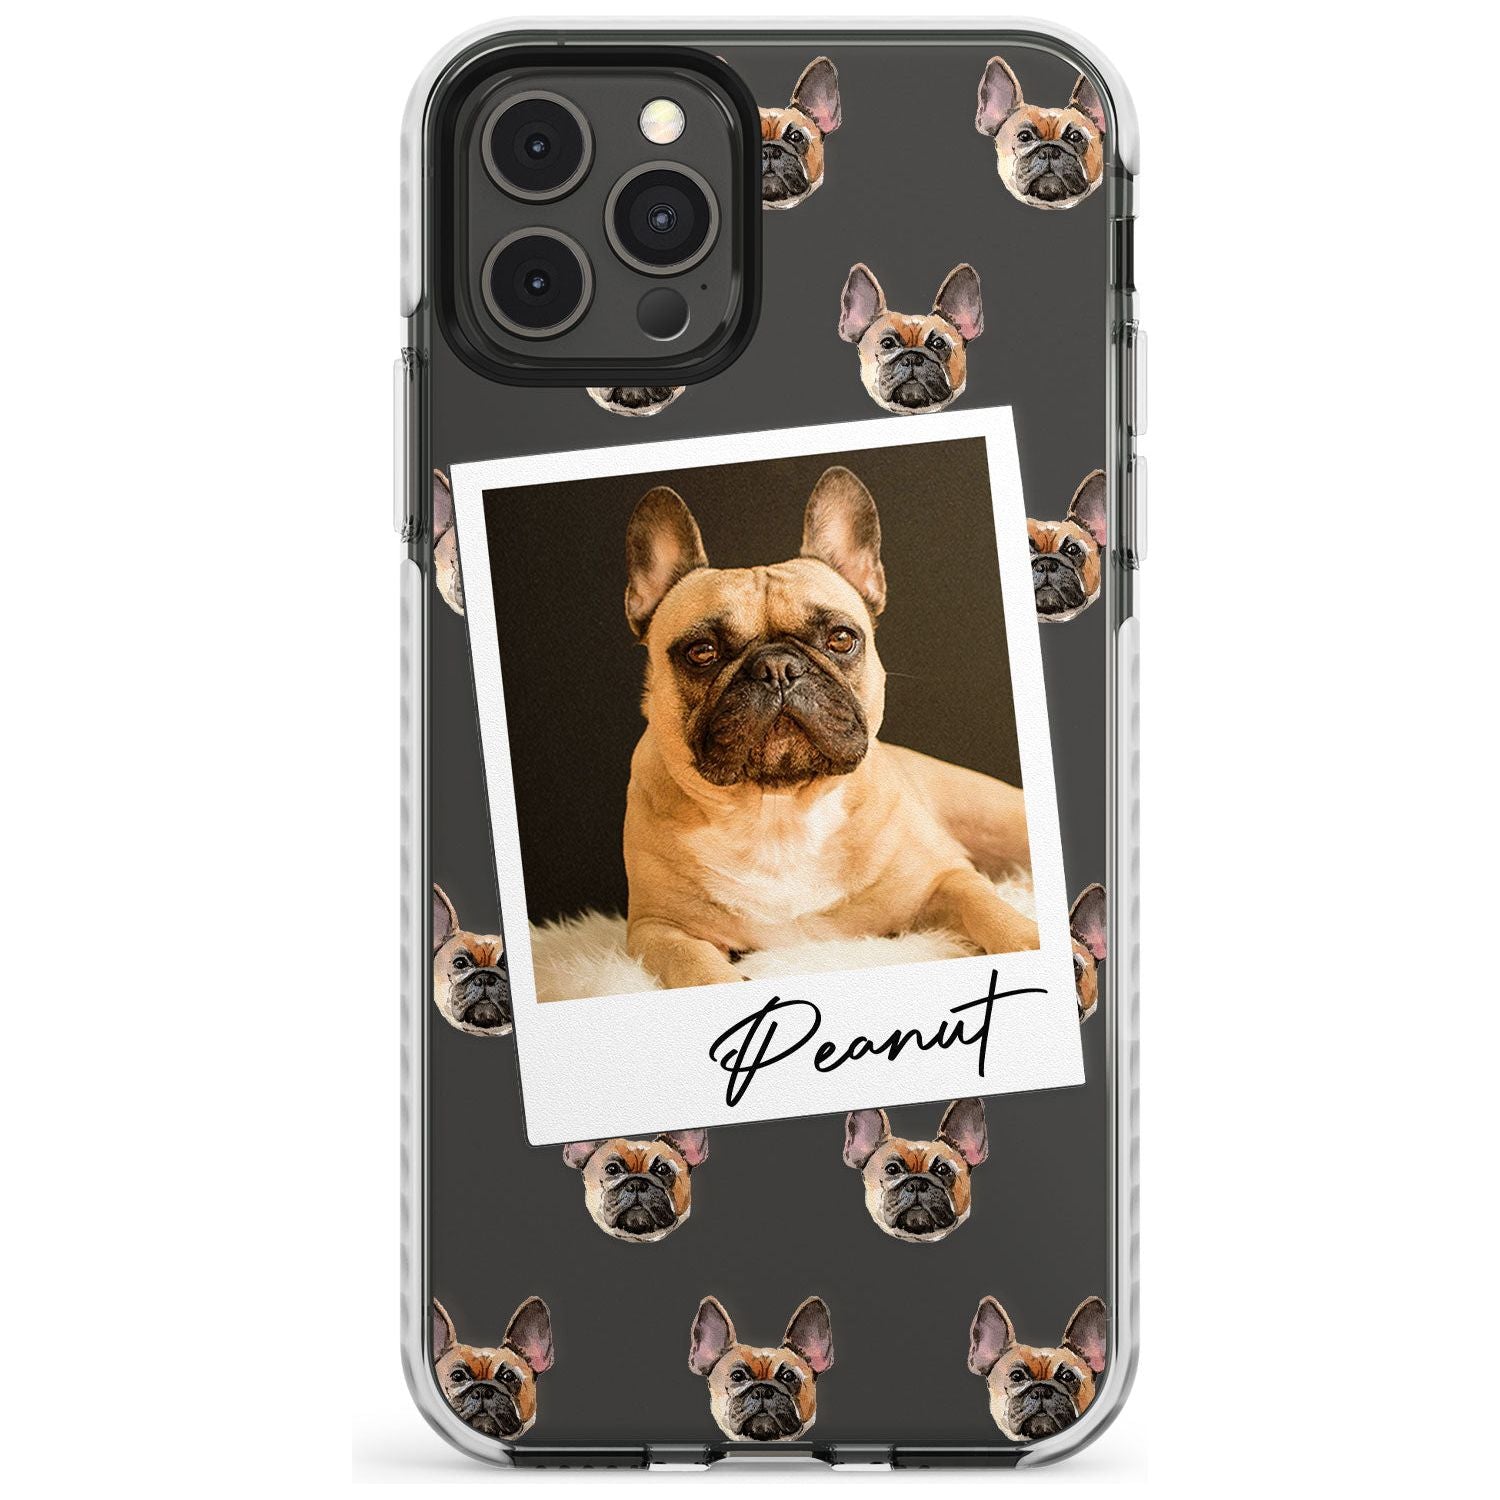 French Bulldog, Tan - Custom Dog Photo Slim TPU Phone Case for iPhone 11 Pro Max